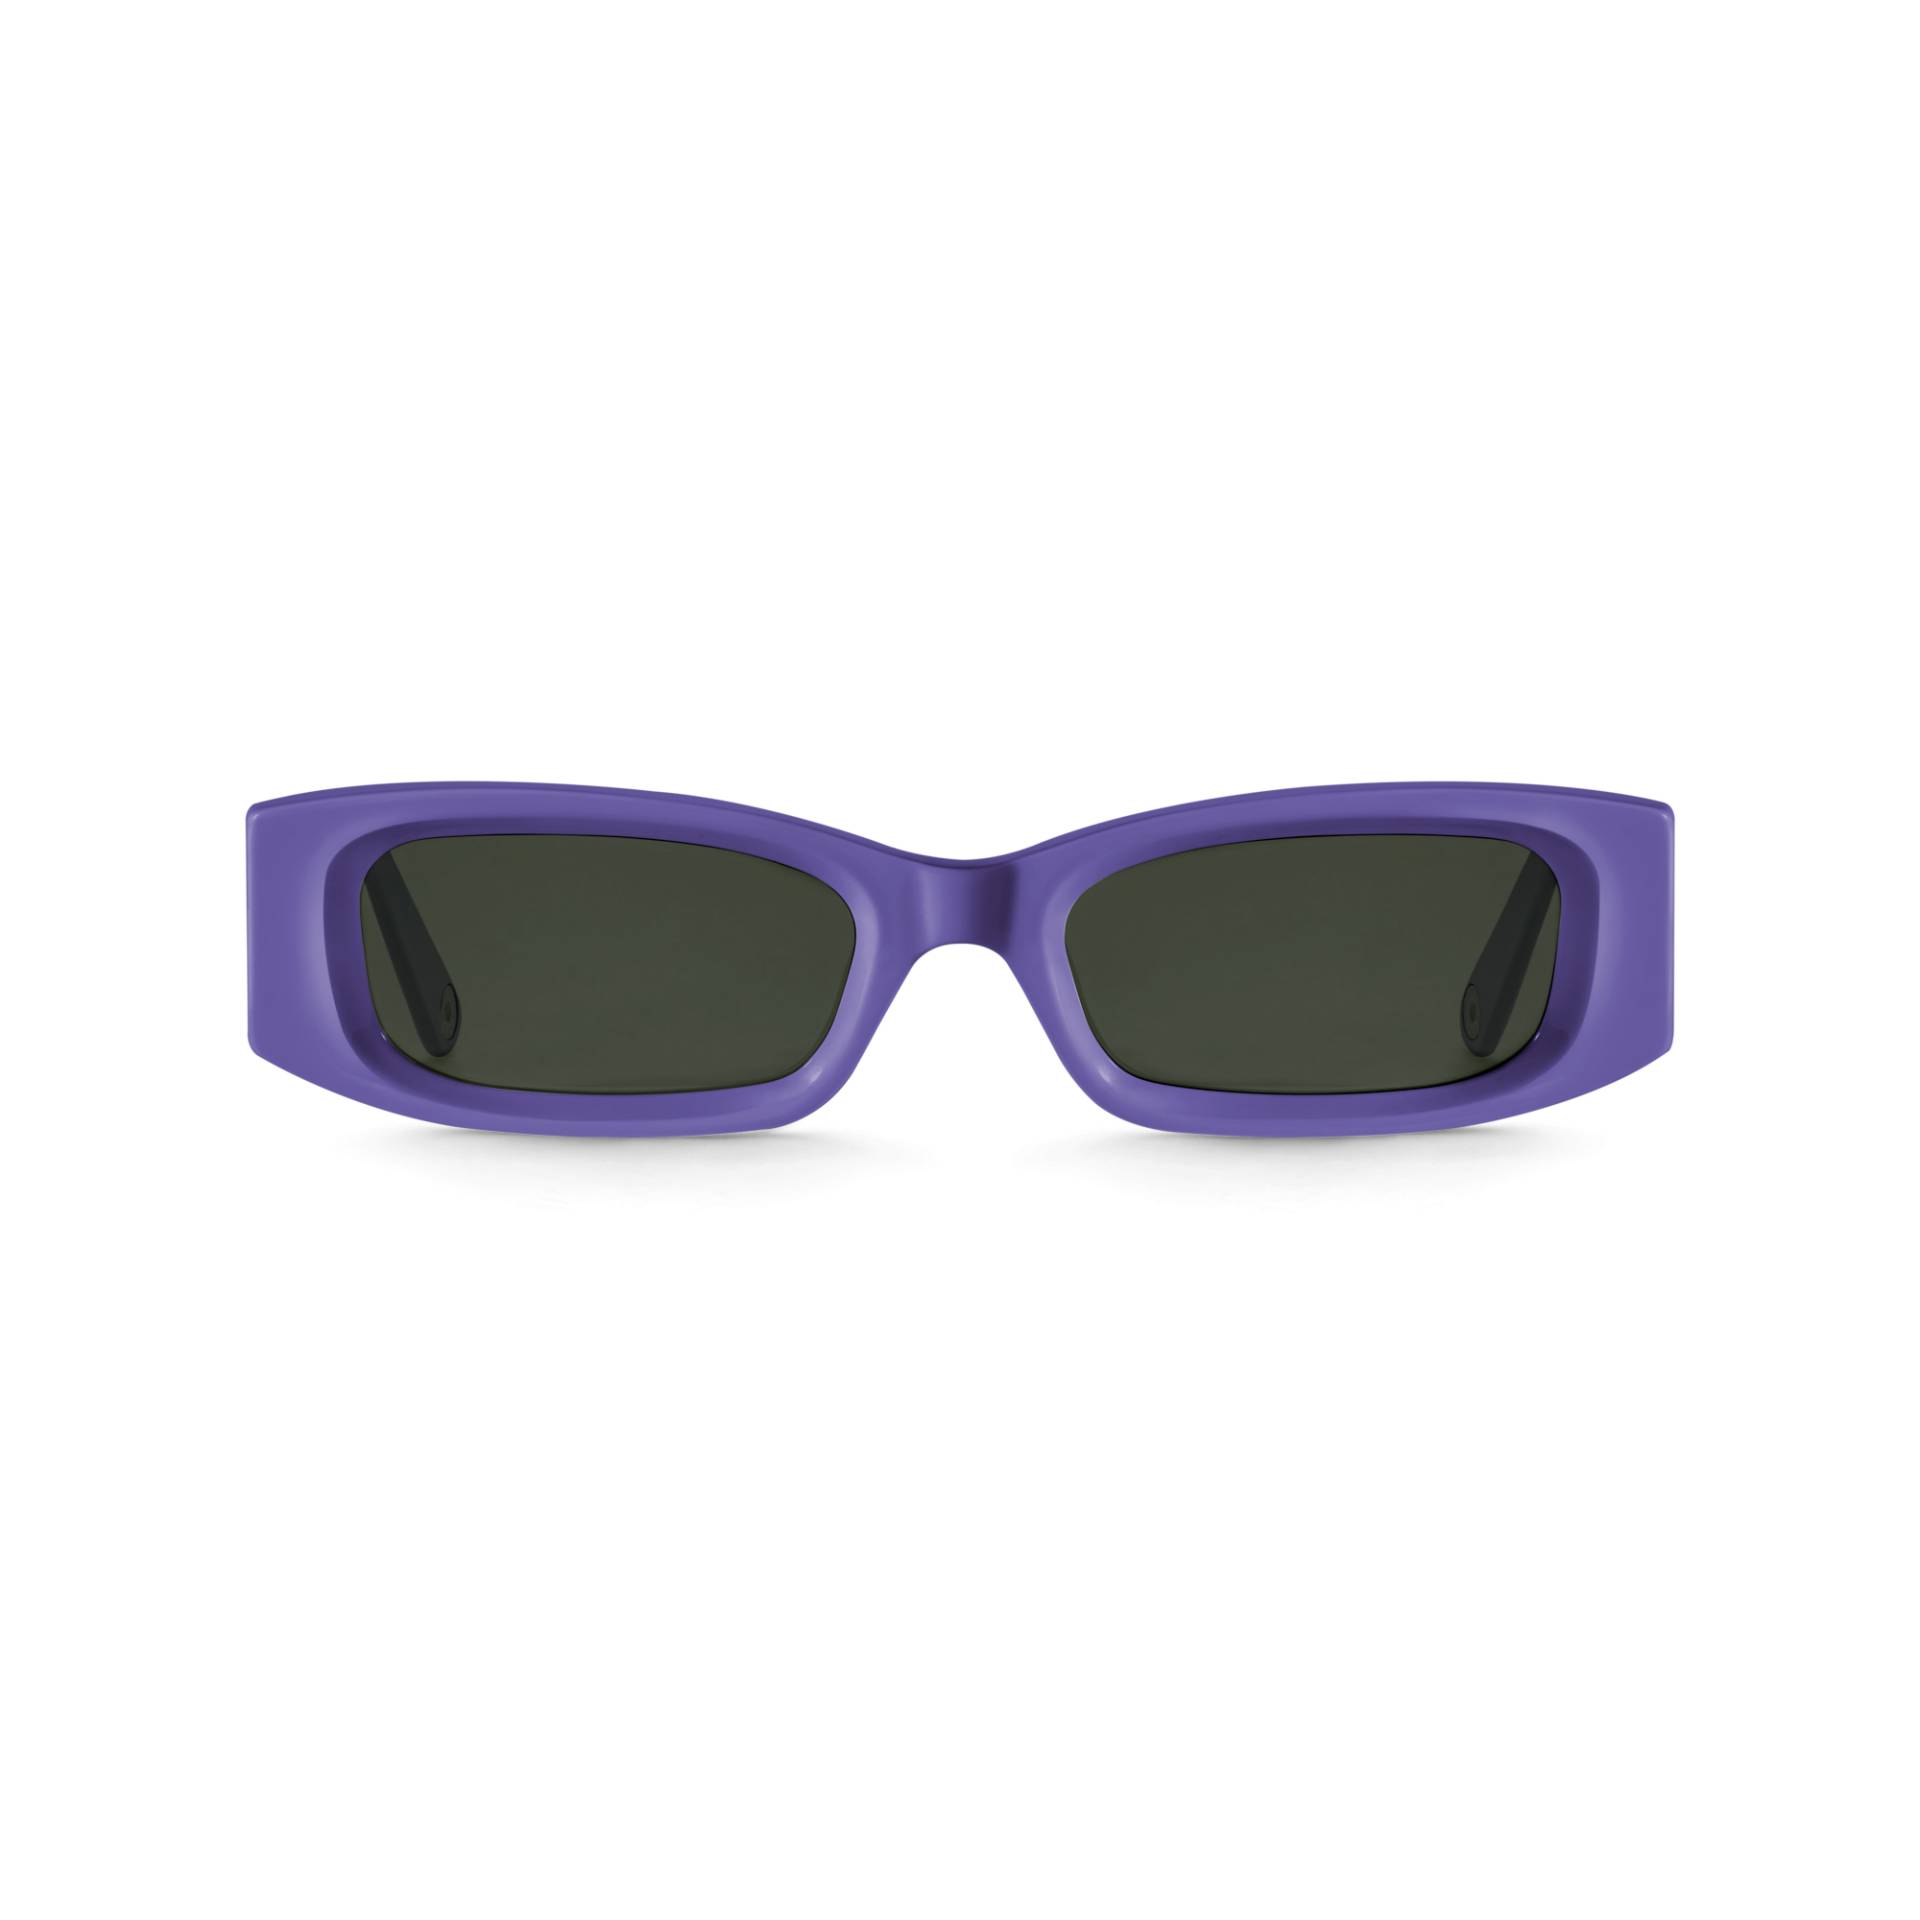 Thomas Sabo Sonnenbrille Kim schmal rechteckig violett schwarz E0021-066-106-A von Thomas Sabo